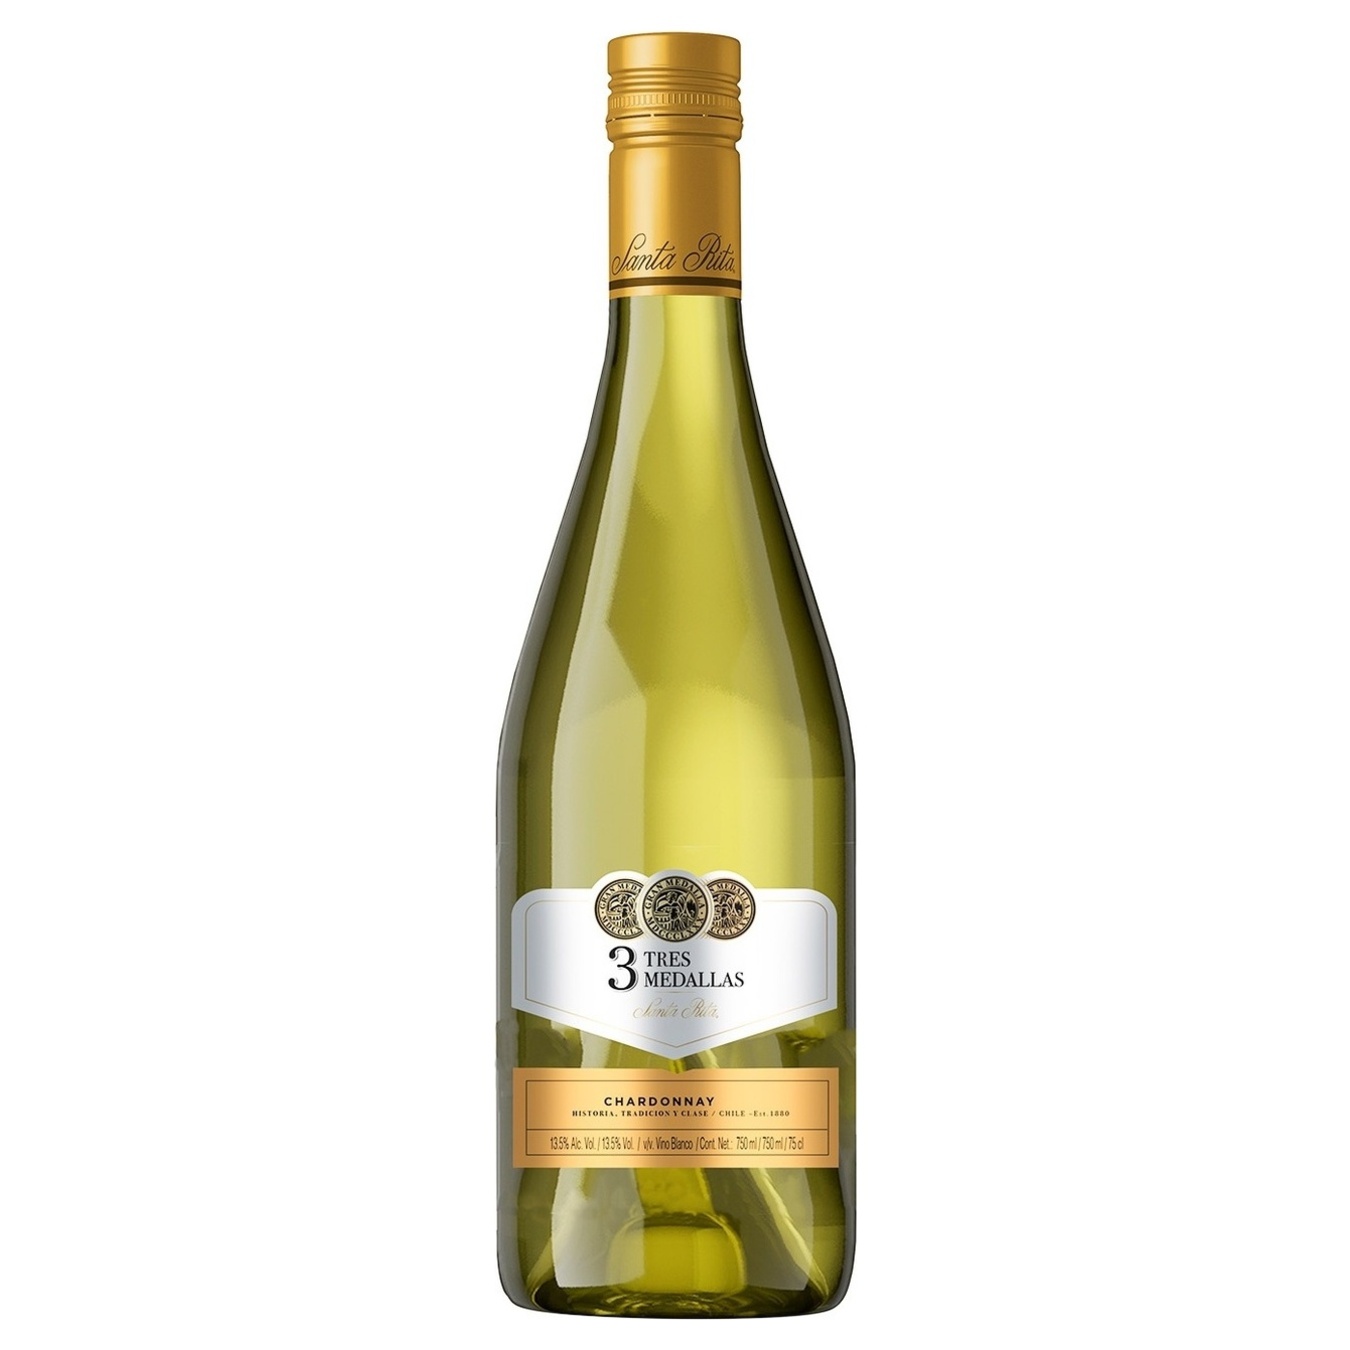 Santa Rita 3 Medallas Chardonnay white dry wine 13.5% 0.75 l